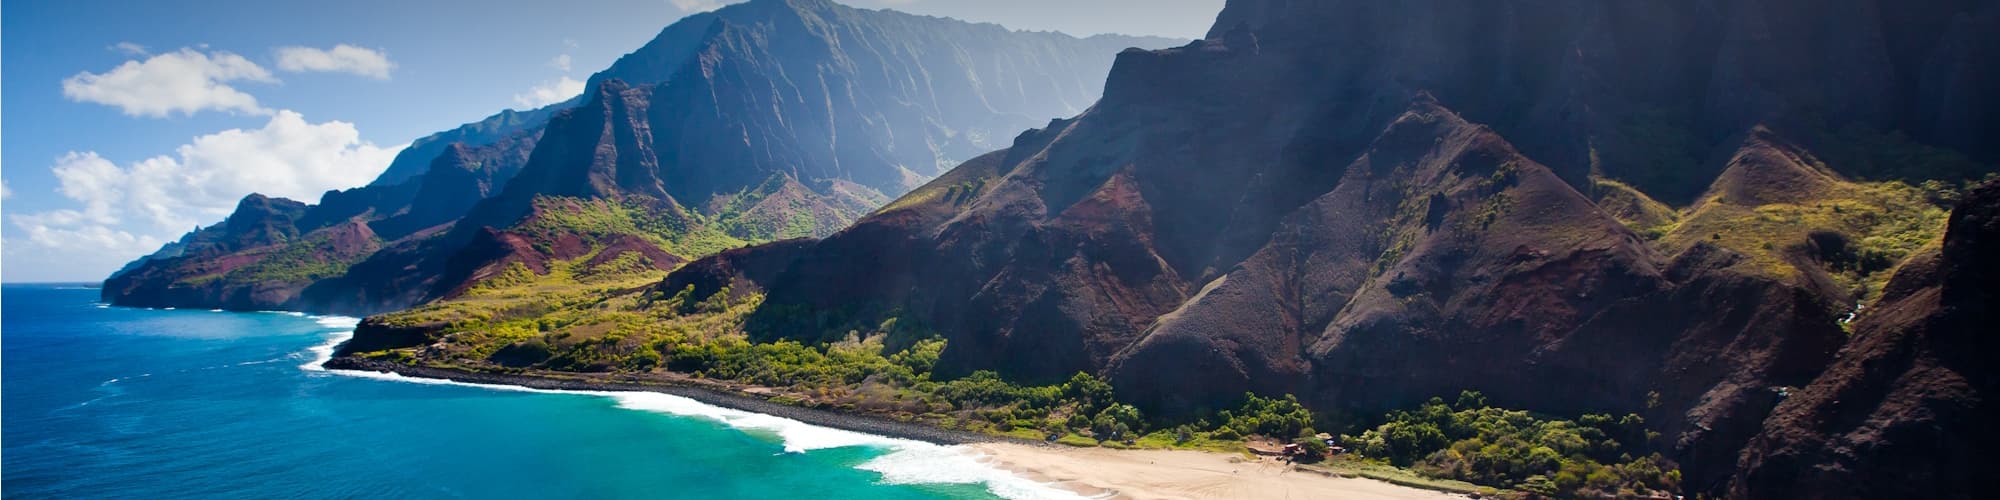 Voyage à Hawaï © Hawaii Tourism Authority/Tor Johnson